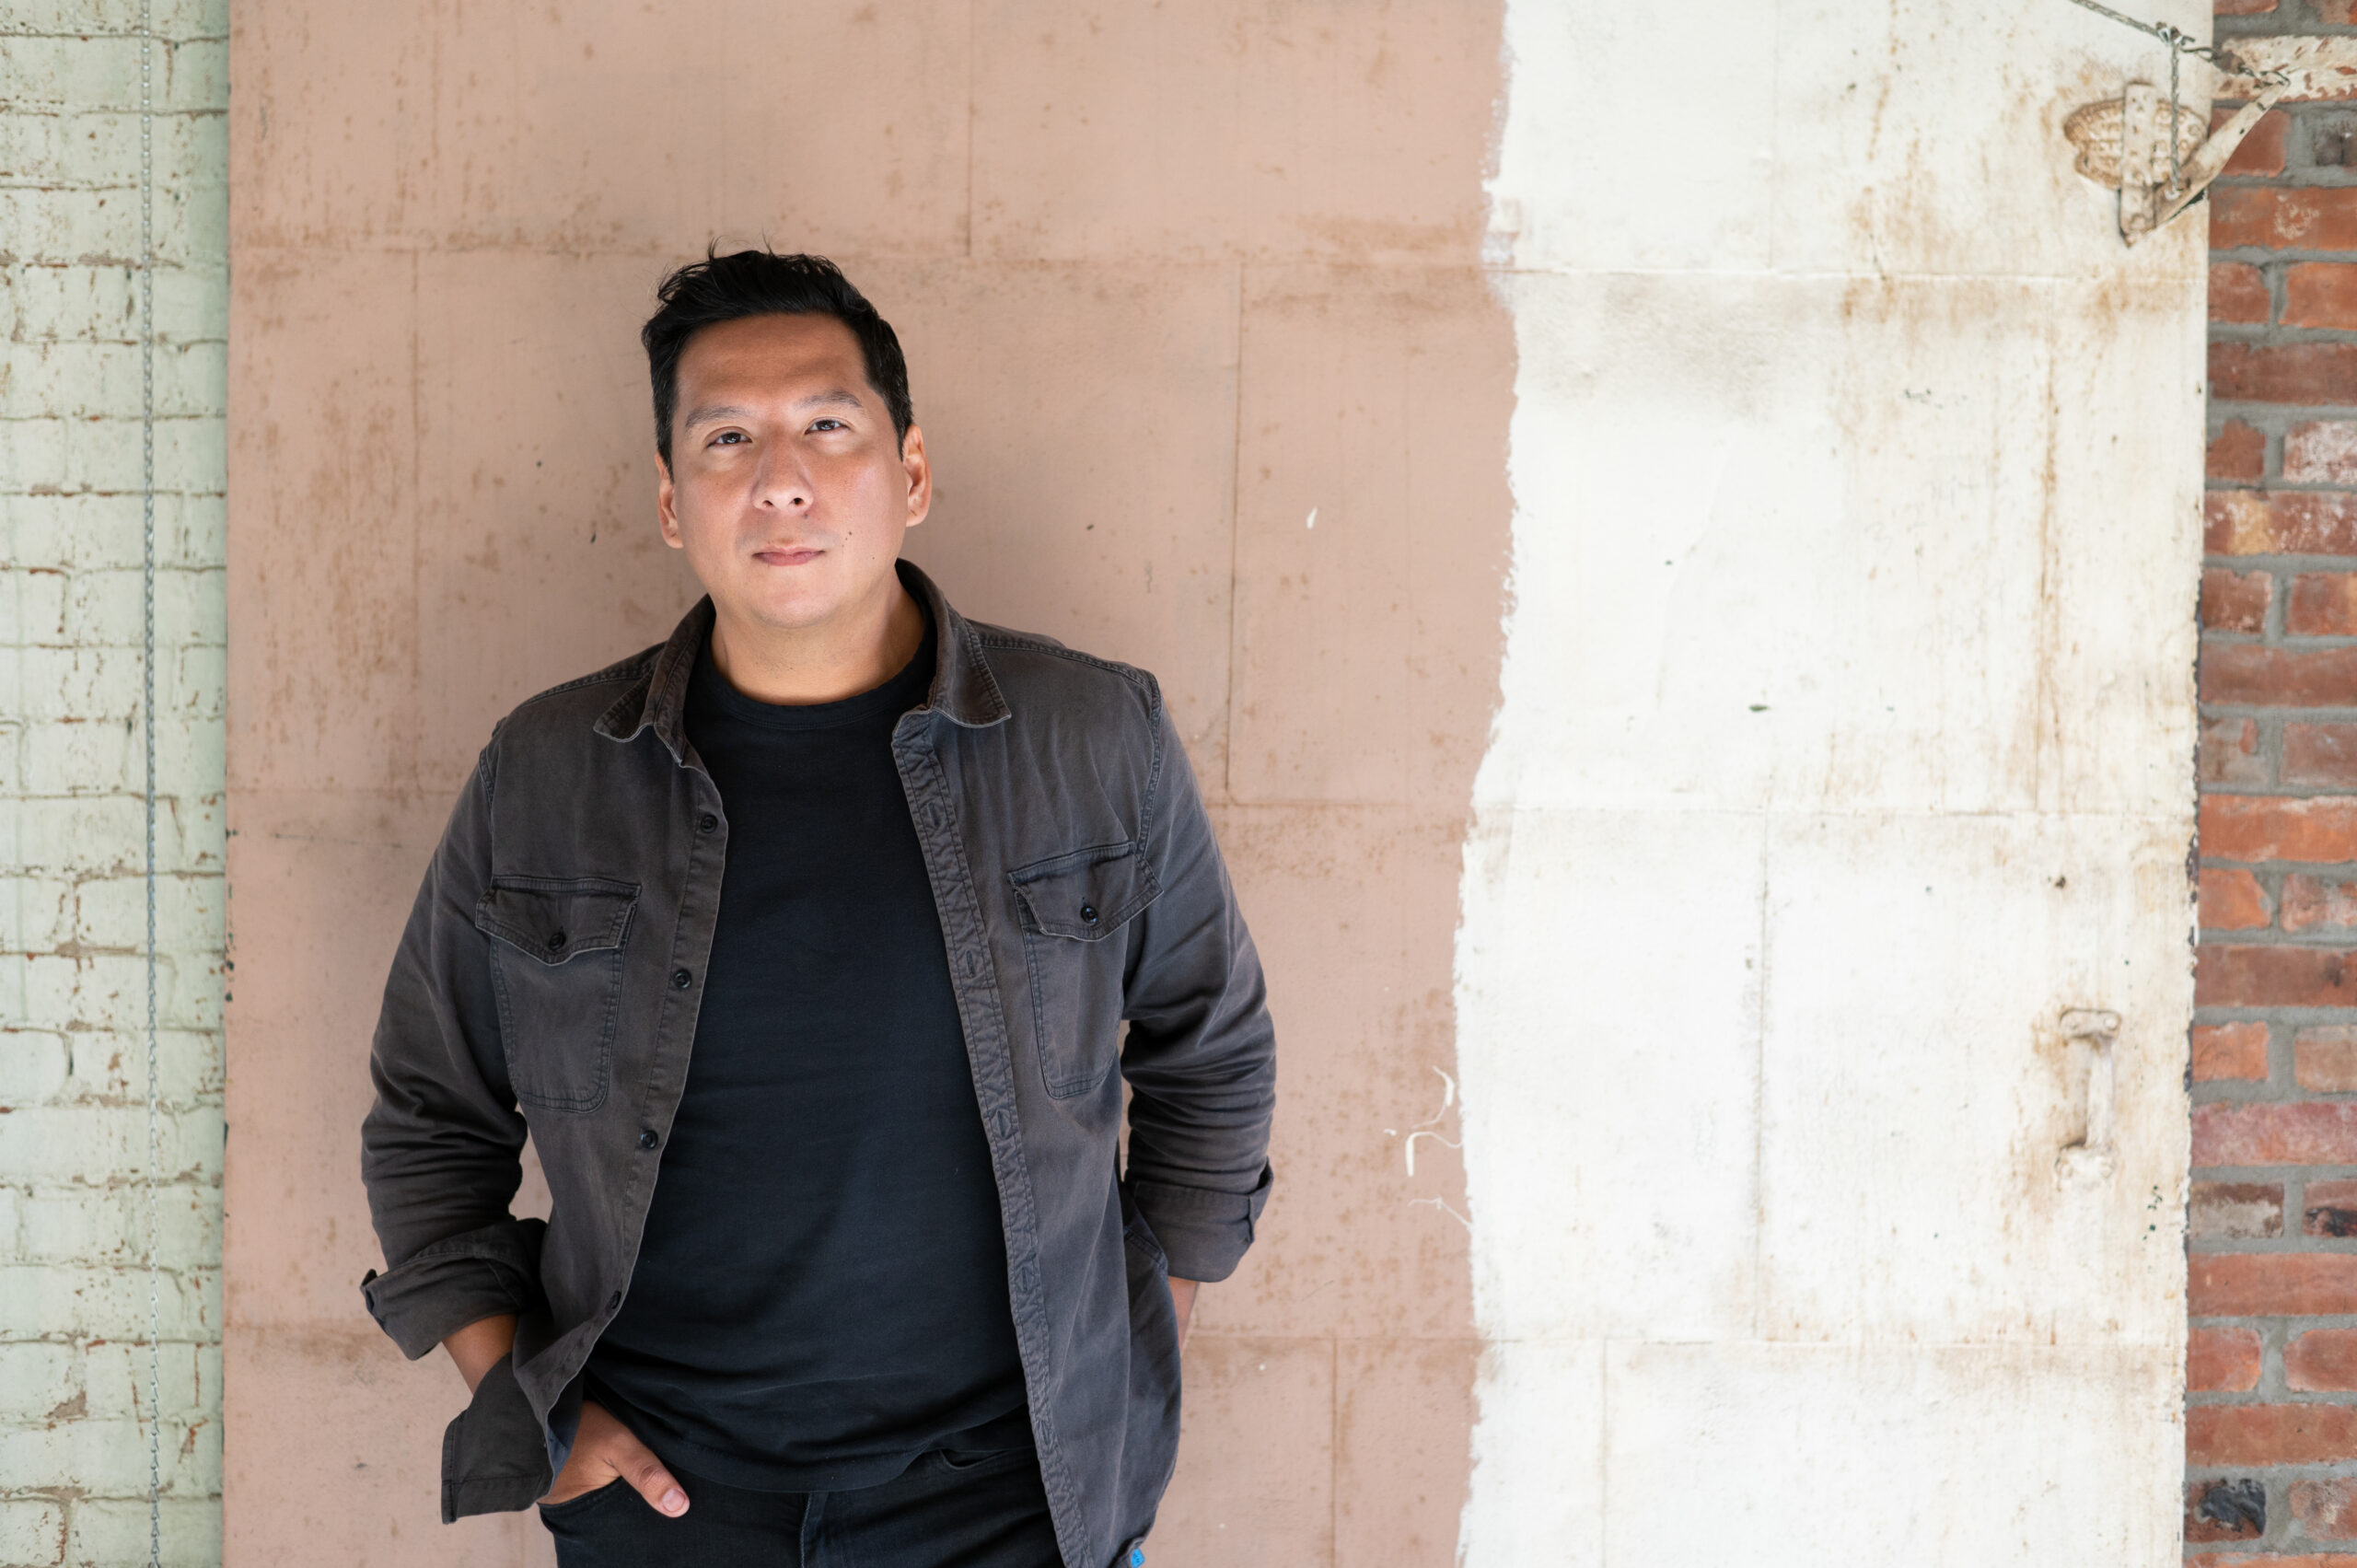 Northwest Indigenous Artist Sky Hopinka Receives 2022 MacArthur “Genius Grant”